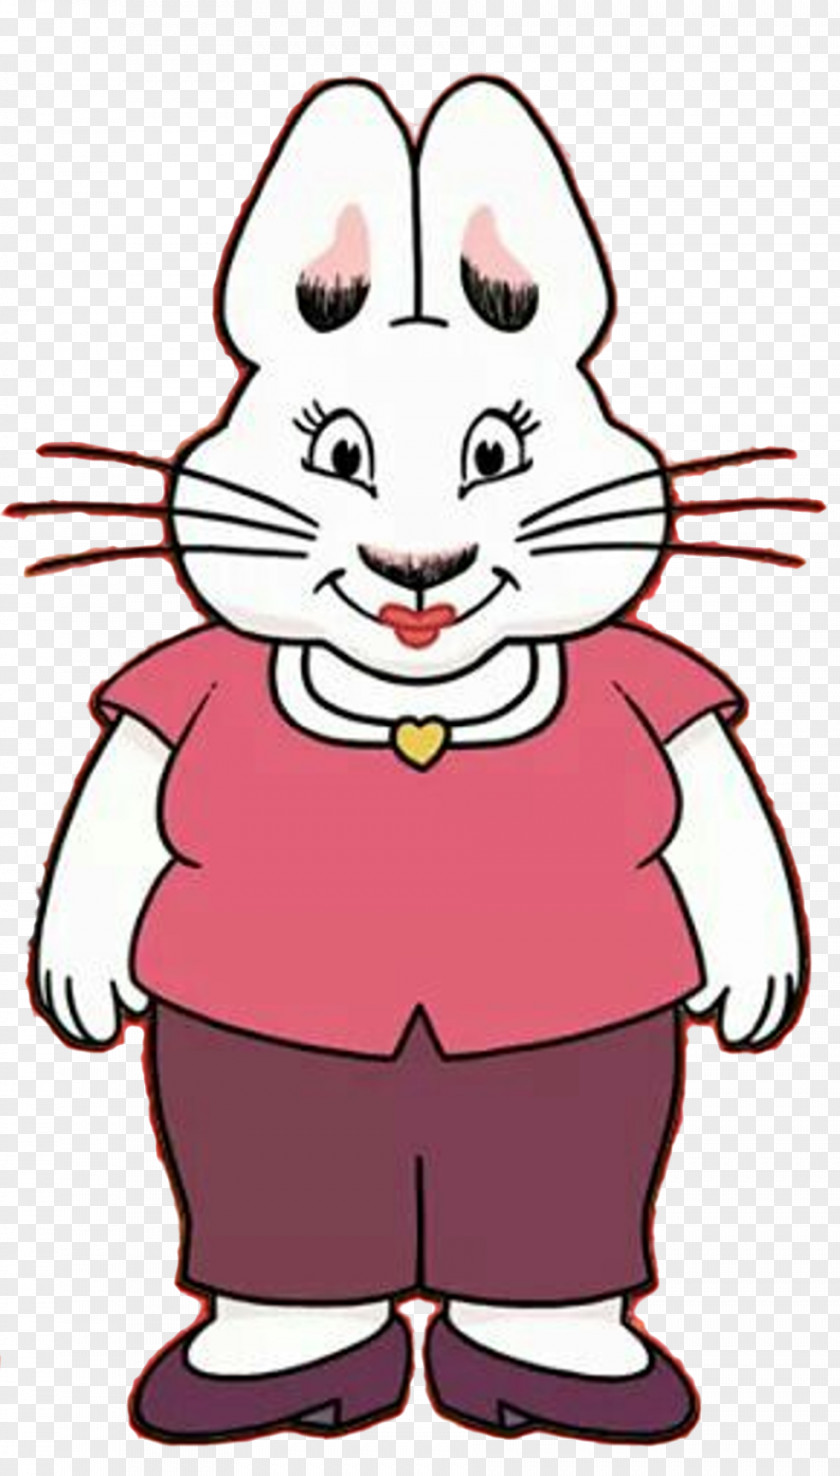 Max Bunny Cartoon Character PNG